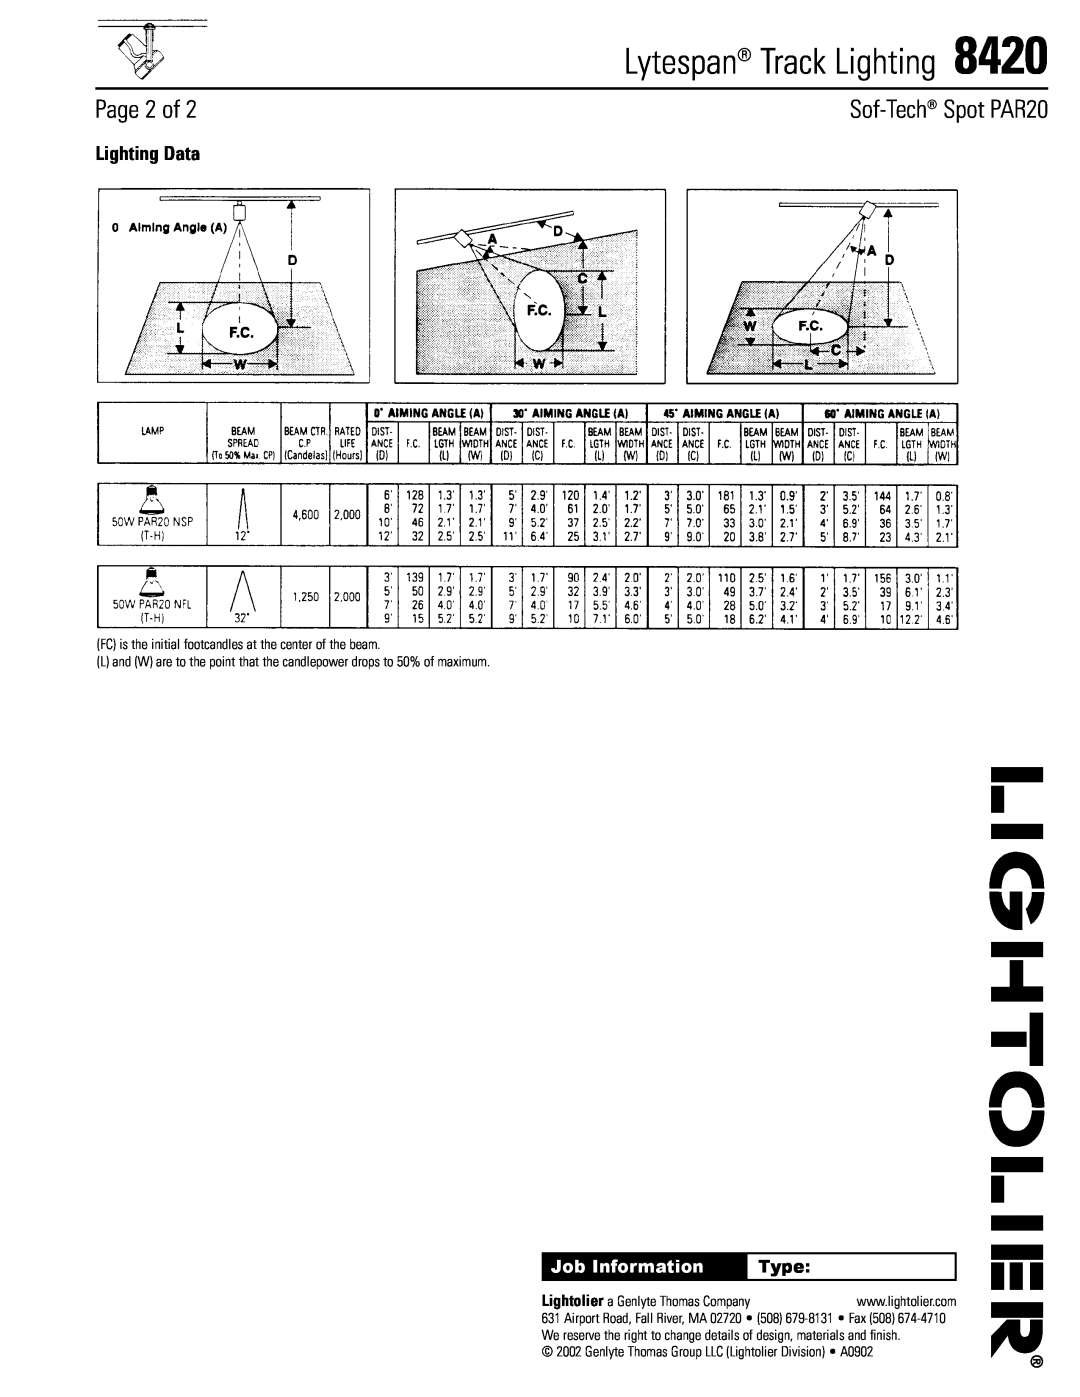 Lightolier 8420 manual Page 2 of, Lighting Data, Type, Lytespan Track Lighting, Sof-Tech Spot PAR20, Job Information 